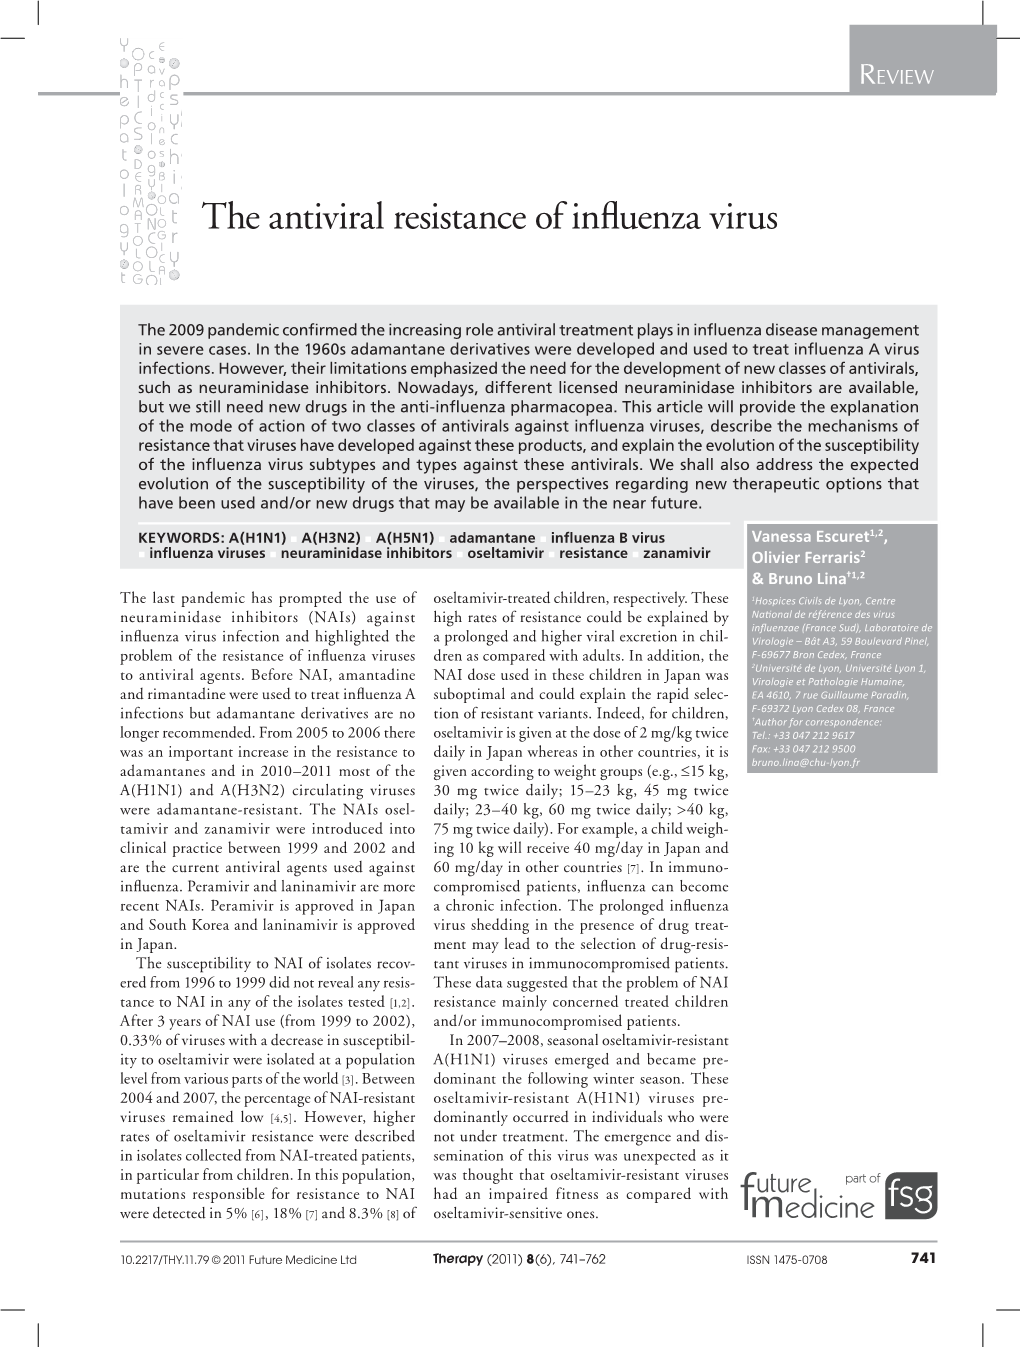 The Antiviral Resistance of Influenza Virus